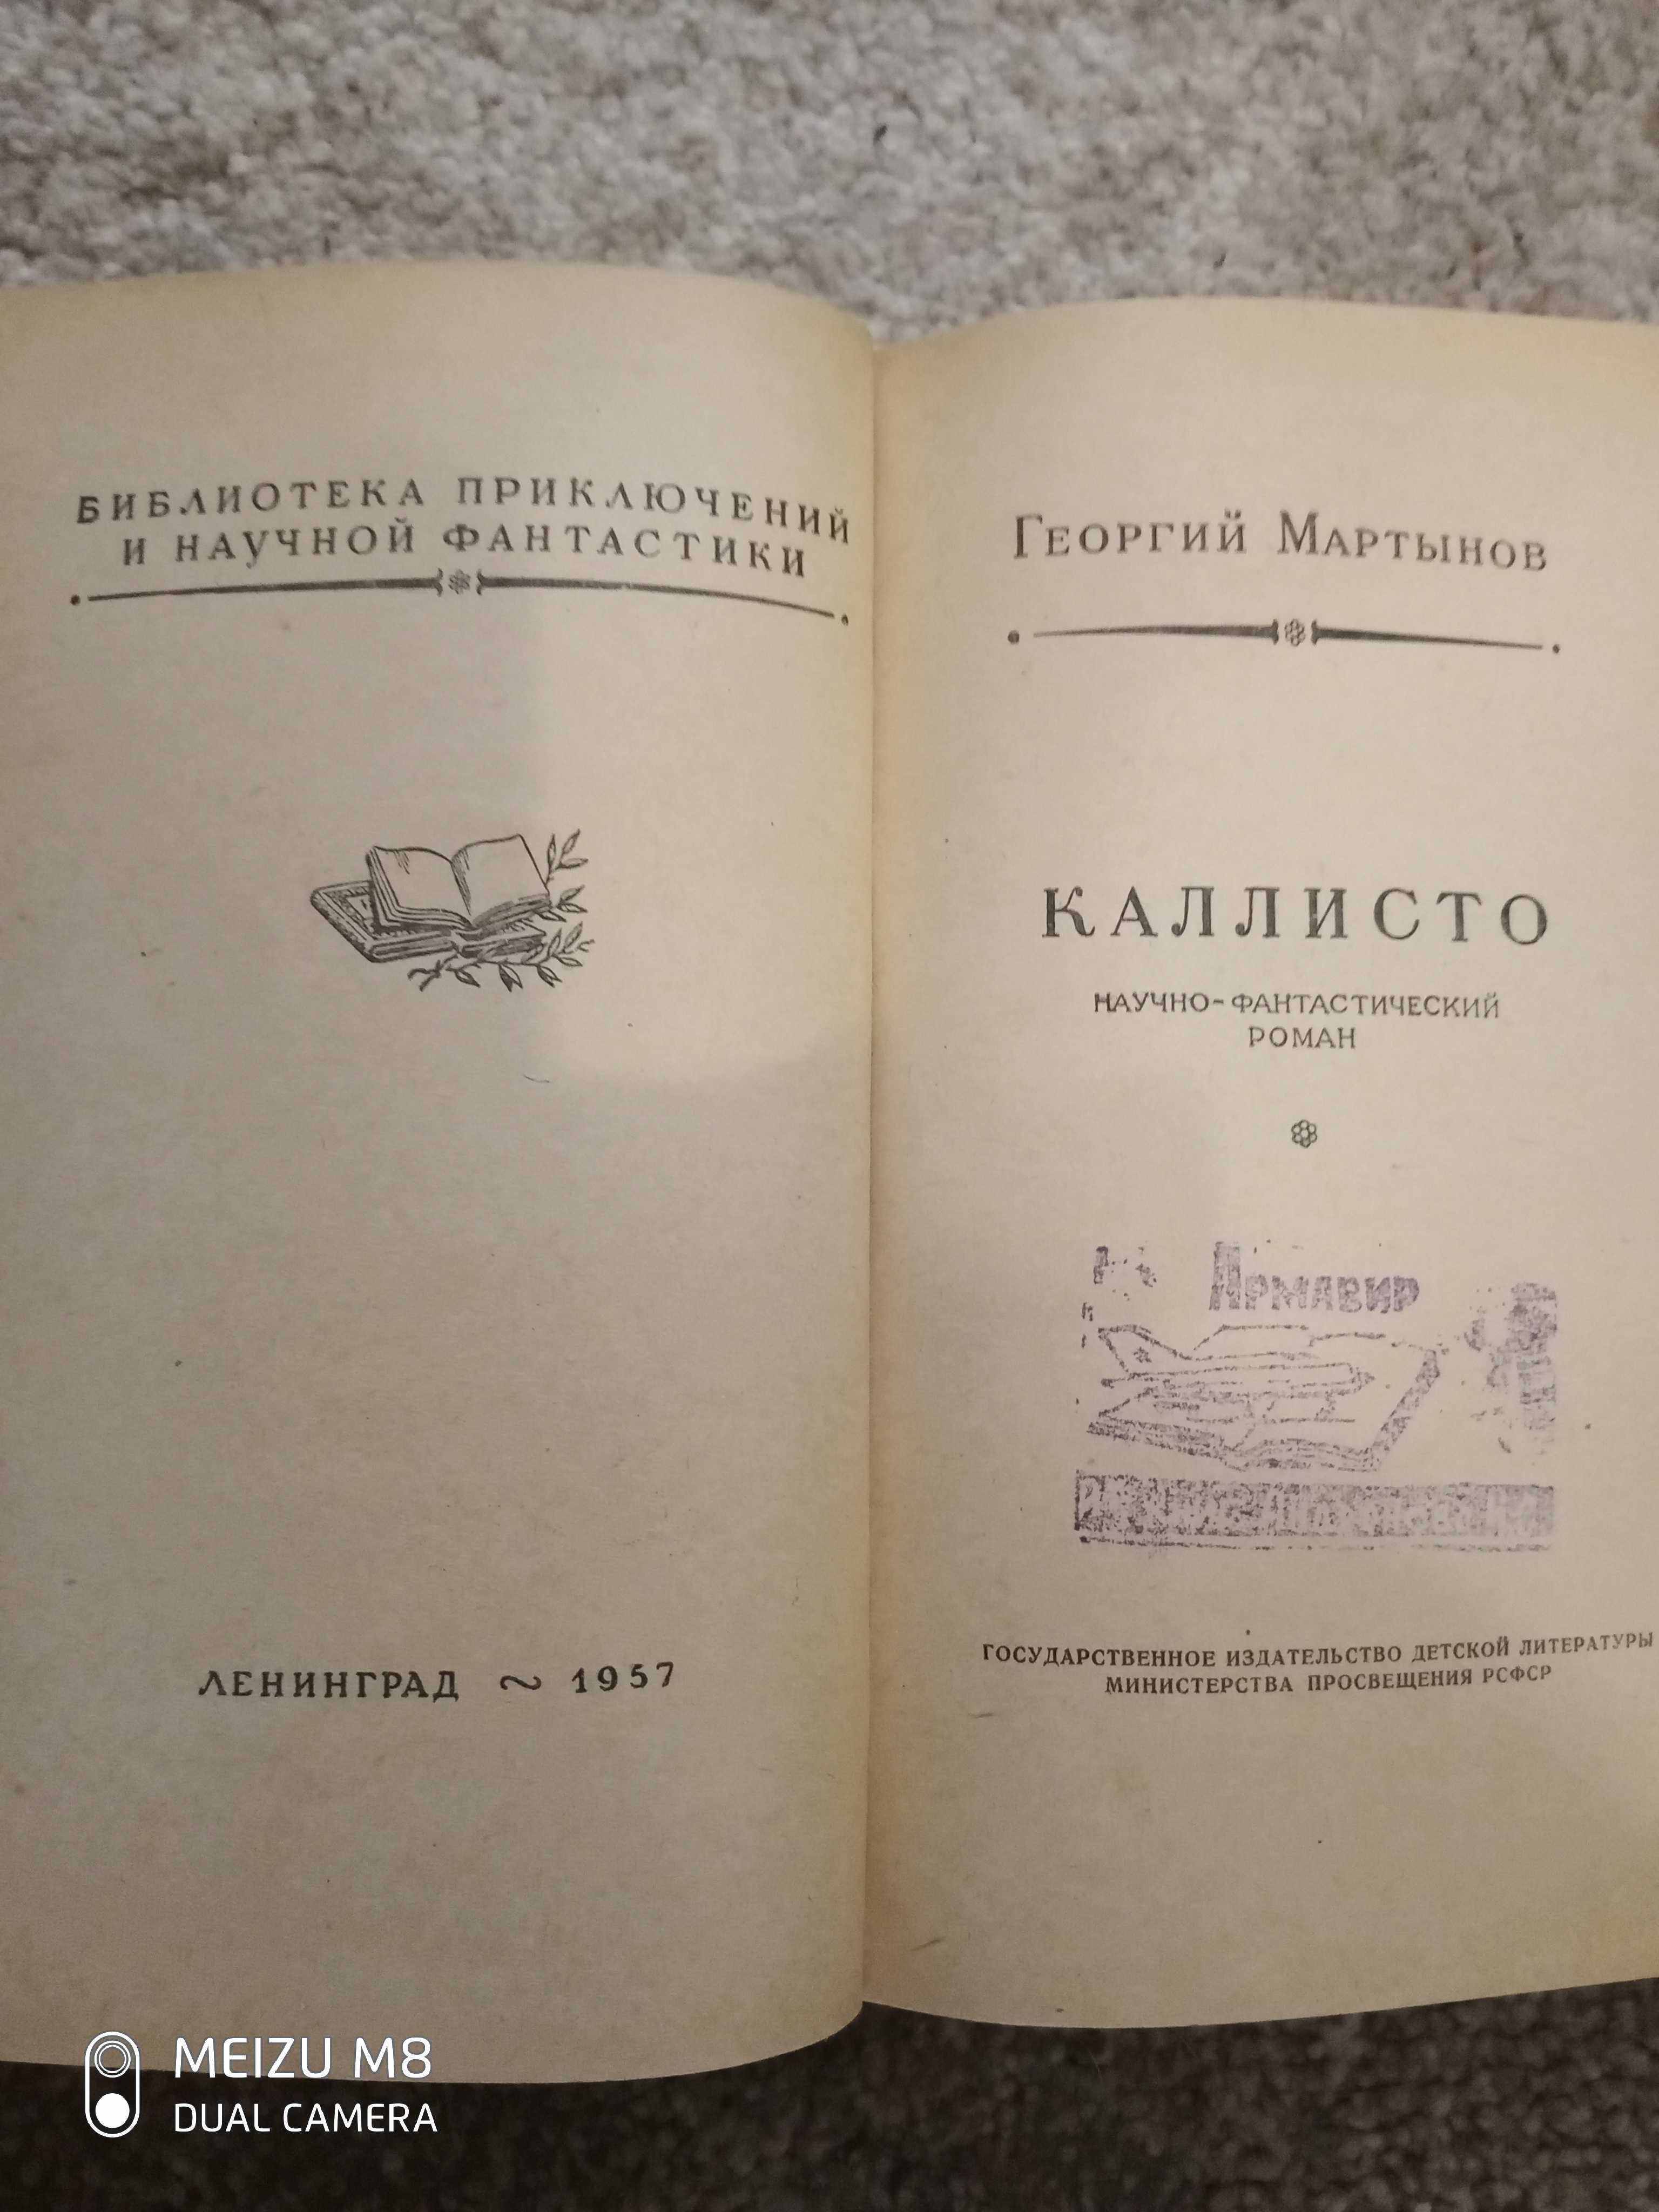 Георгий Мартынов Каллисто 1957 БПНФ библиотека приключений фантастики